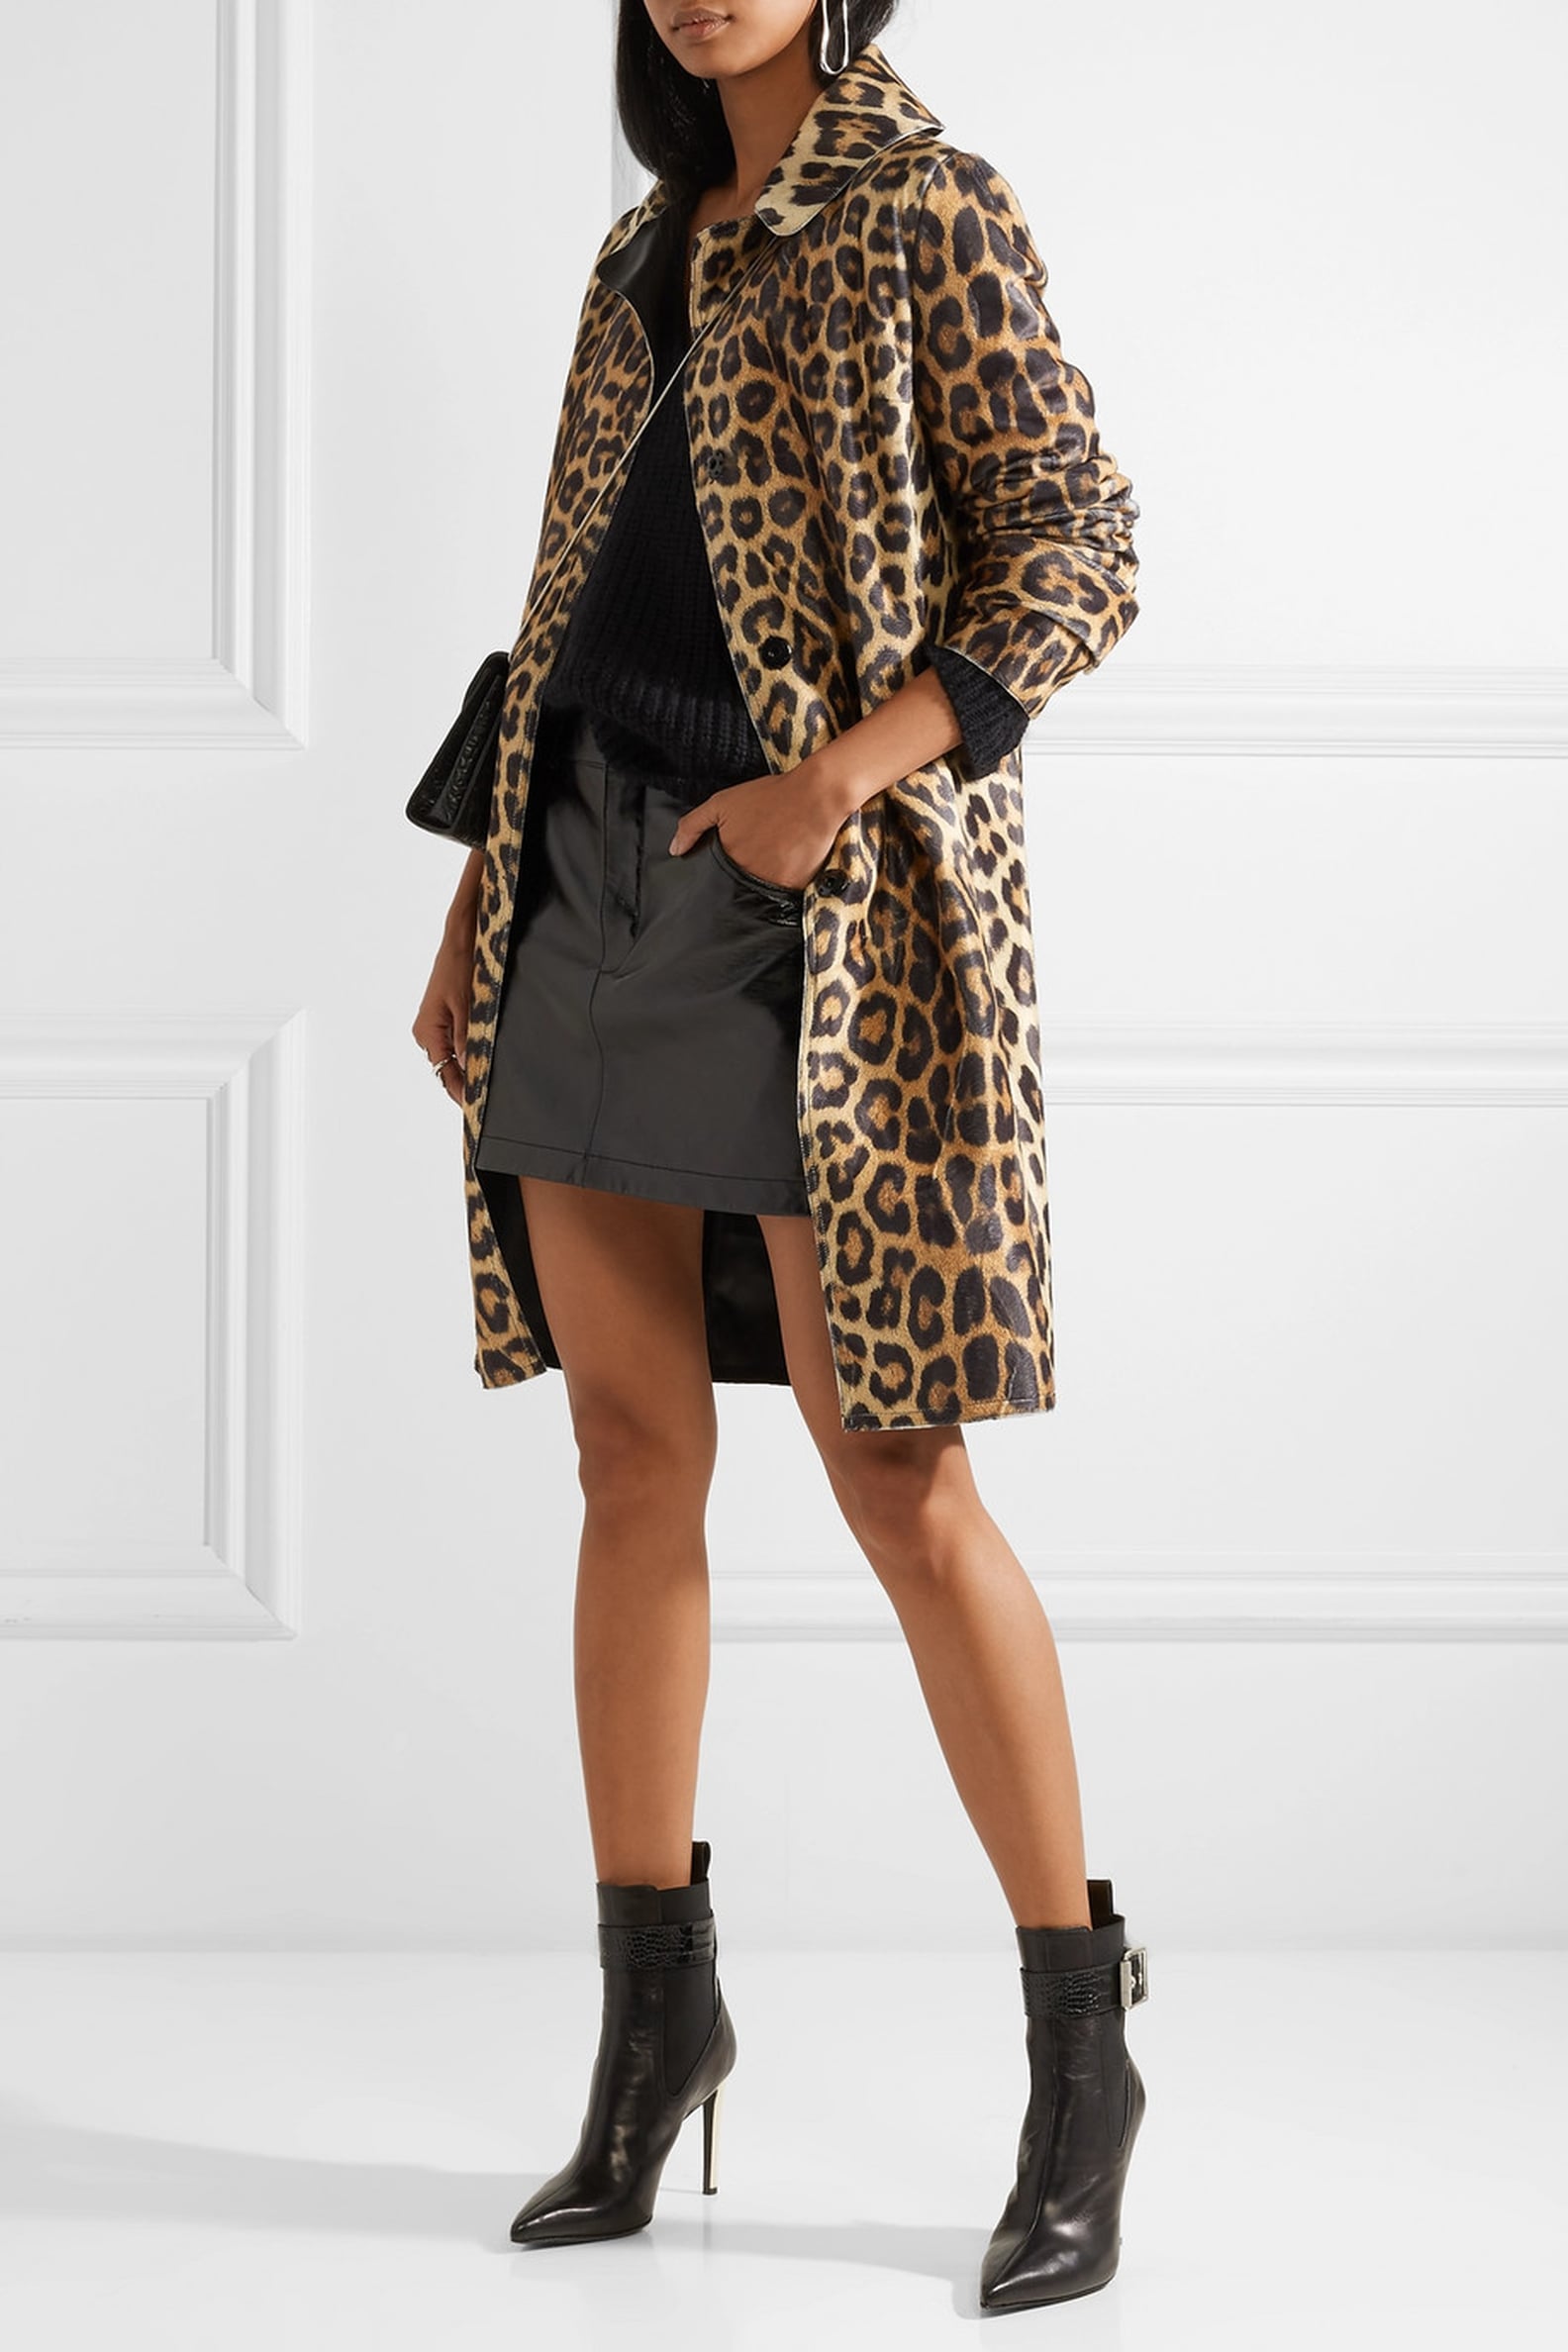 Jennifer Lopez's Leopard Trench Coat | POPSUGAR Fashion